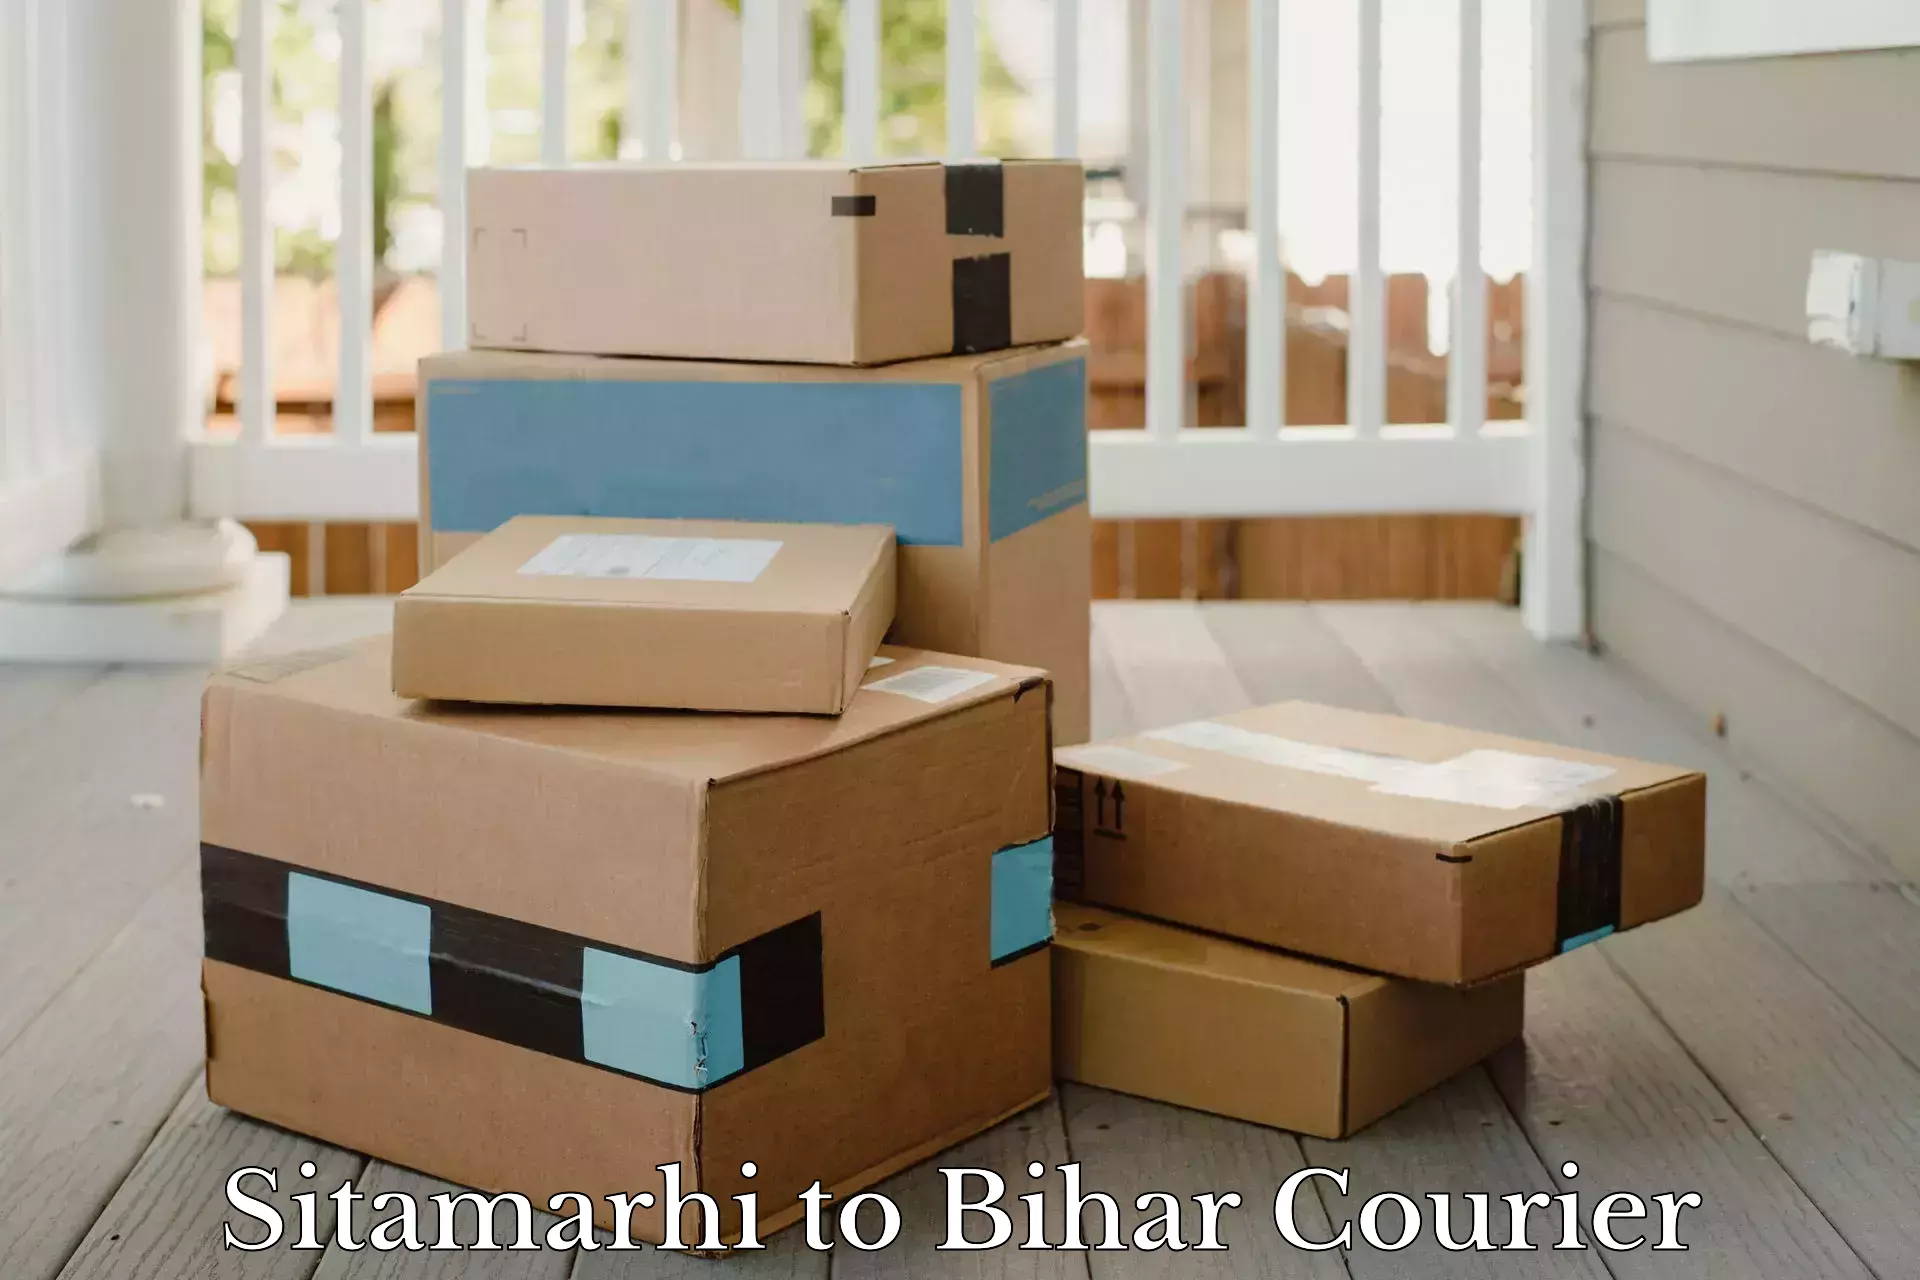 Courier service comparison Sitamarhi to Bihar